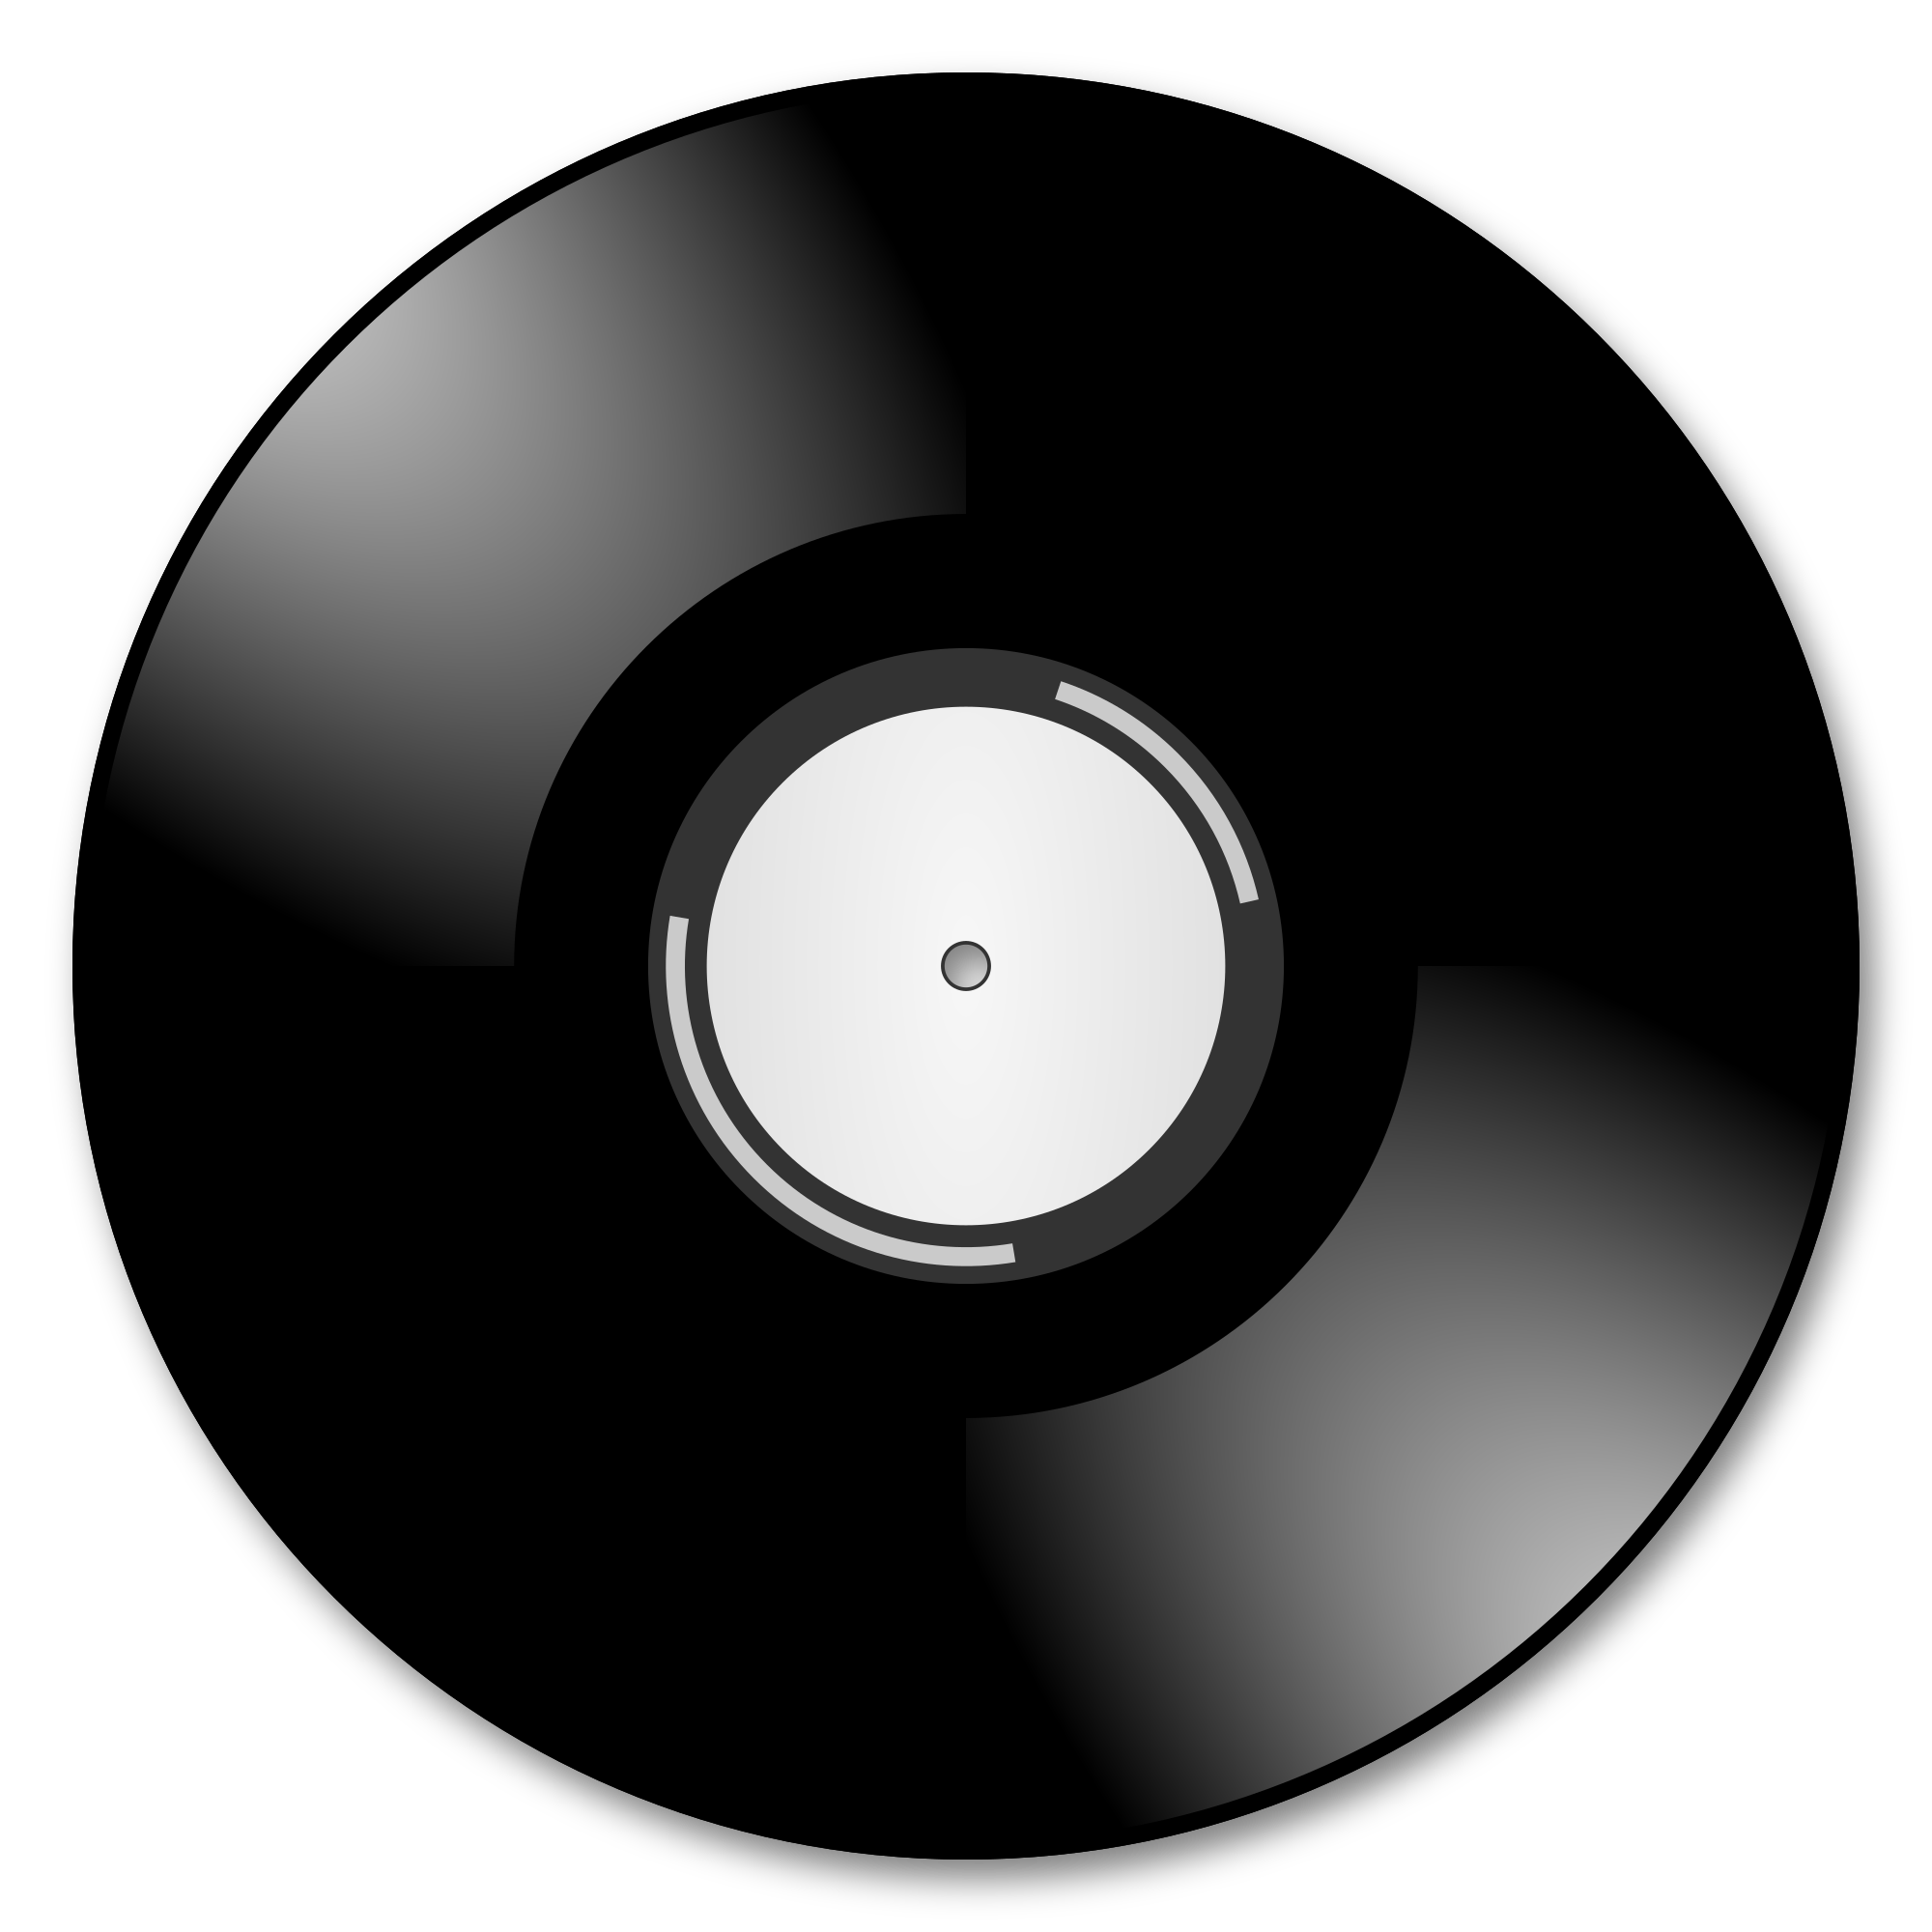 File:Vinyl record.svg - Wikimedia Commons